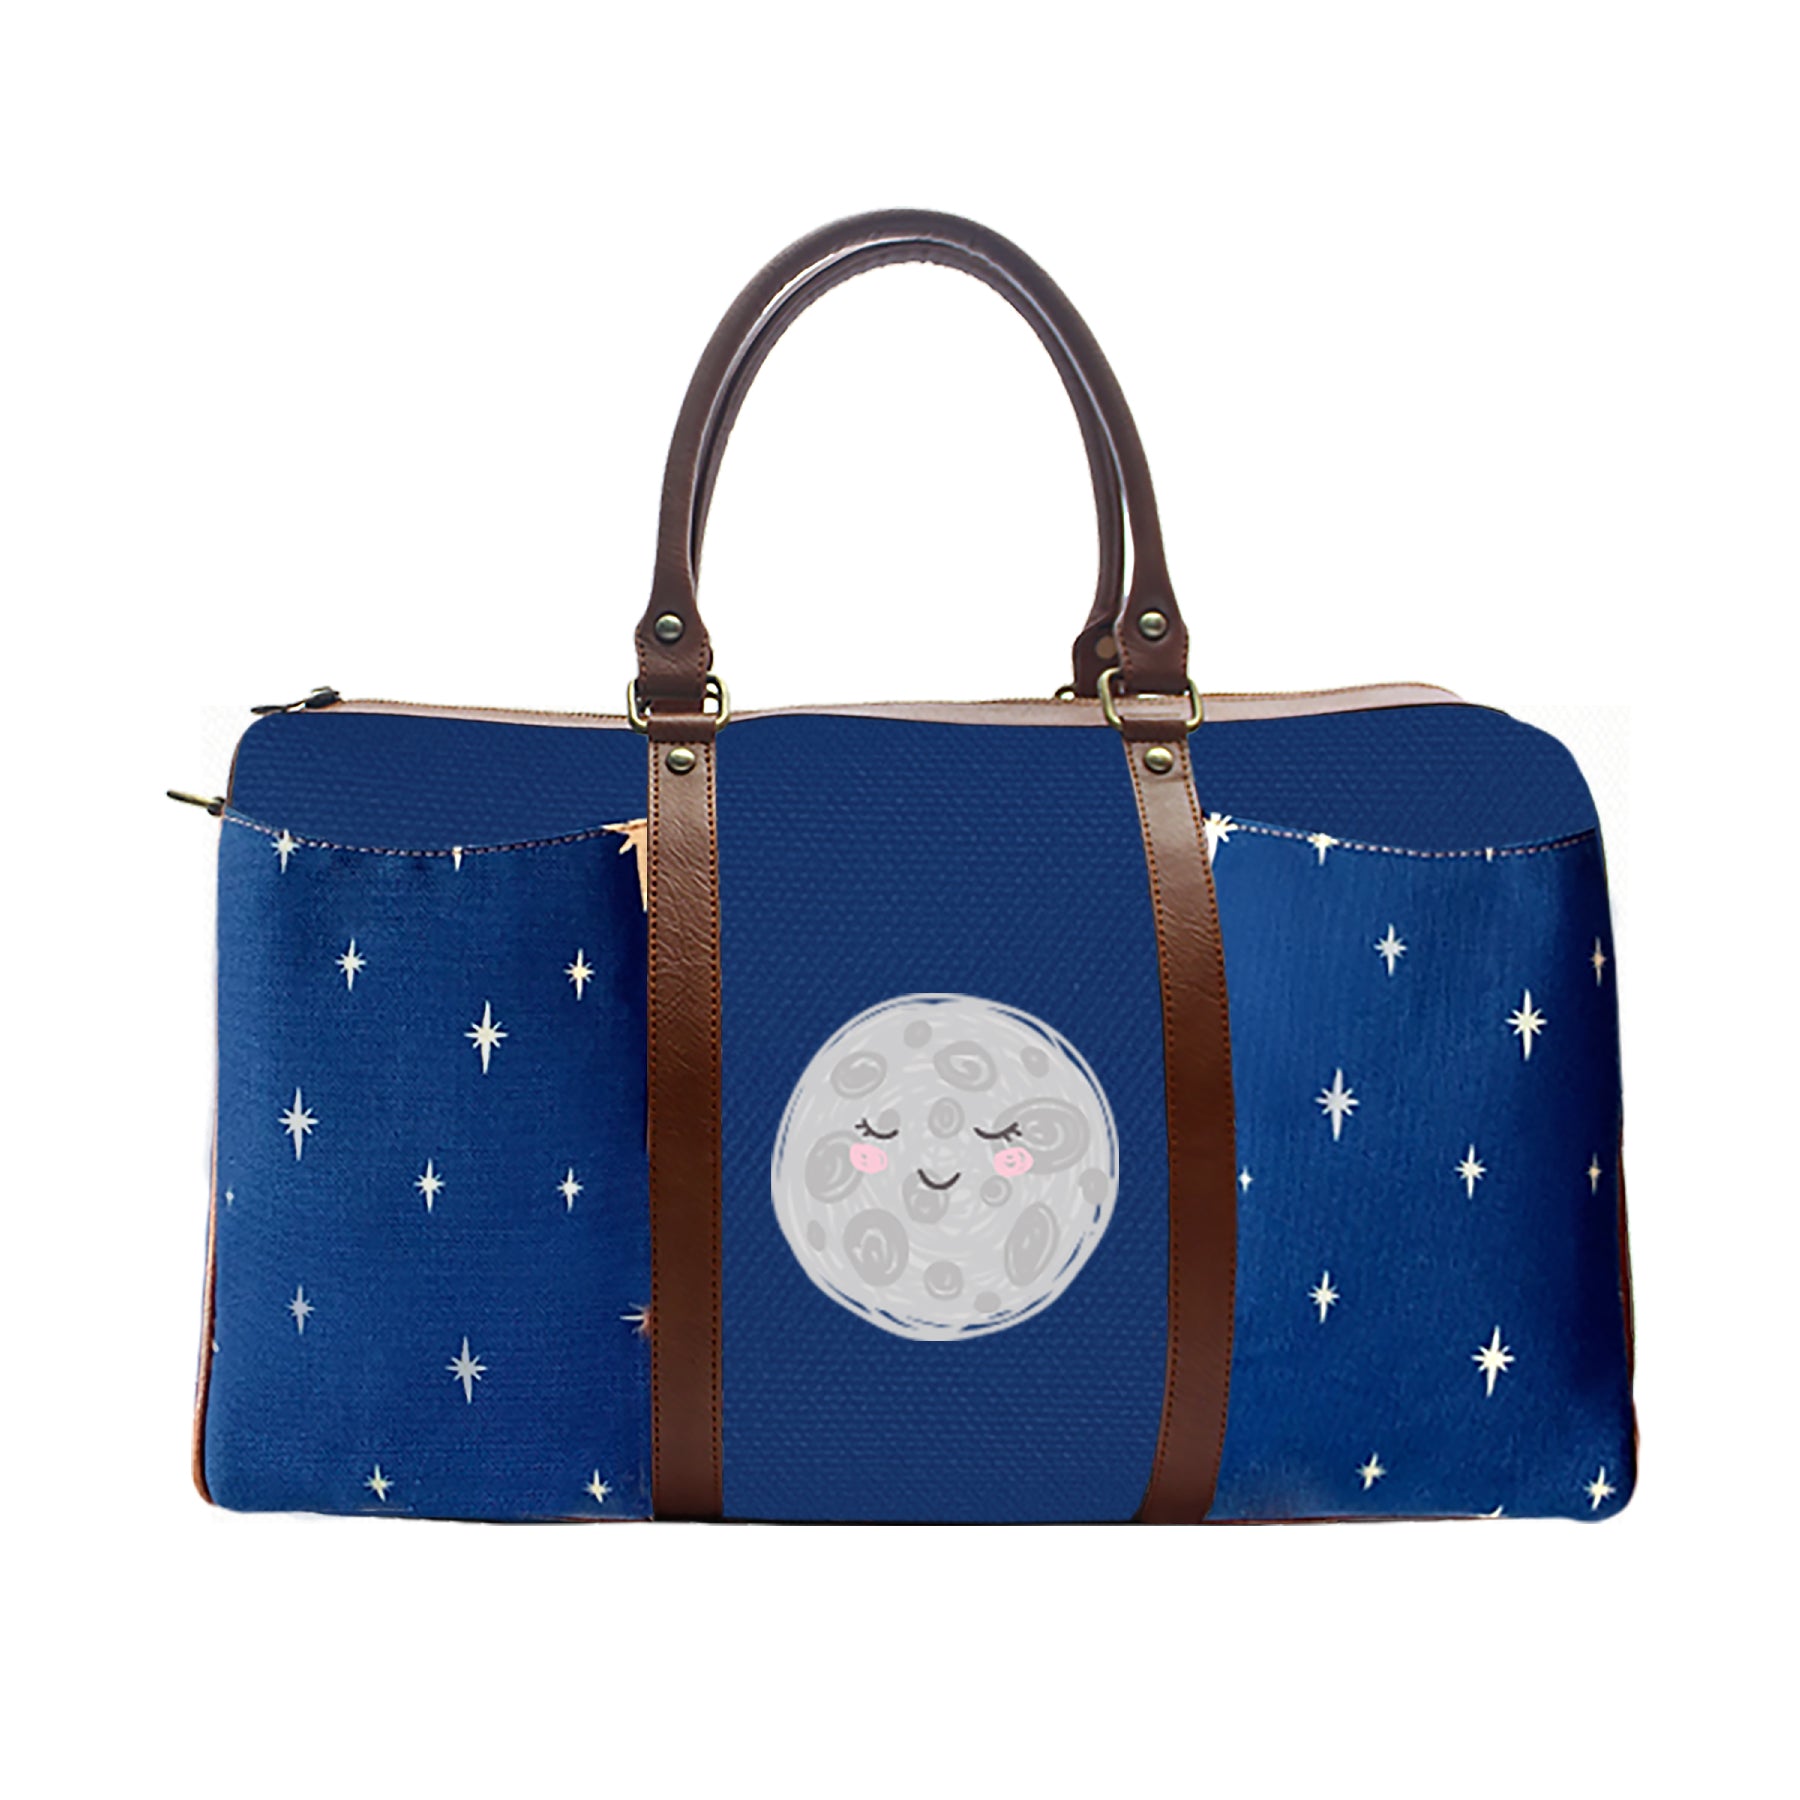 Urbanhand urban hand Canvas and PU Leather diaper bag Moon Star Blue Brown stripe